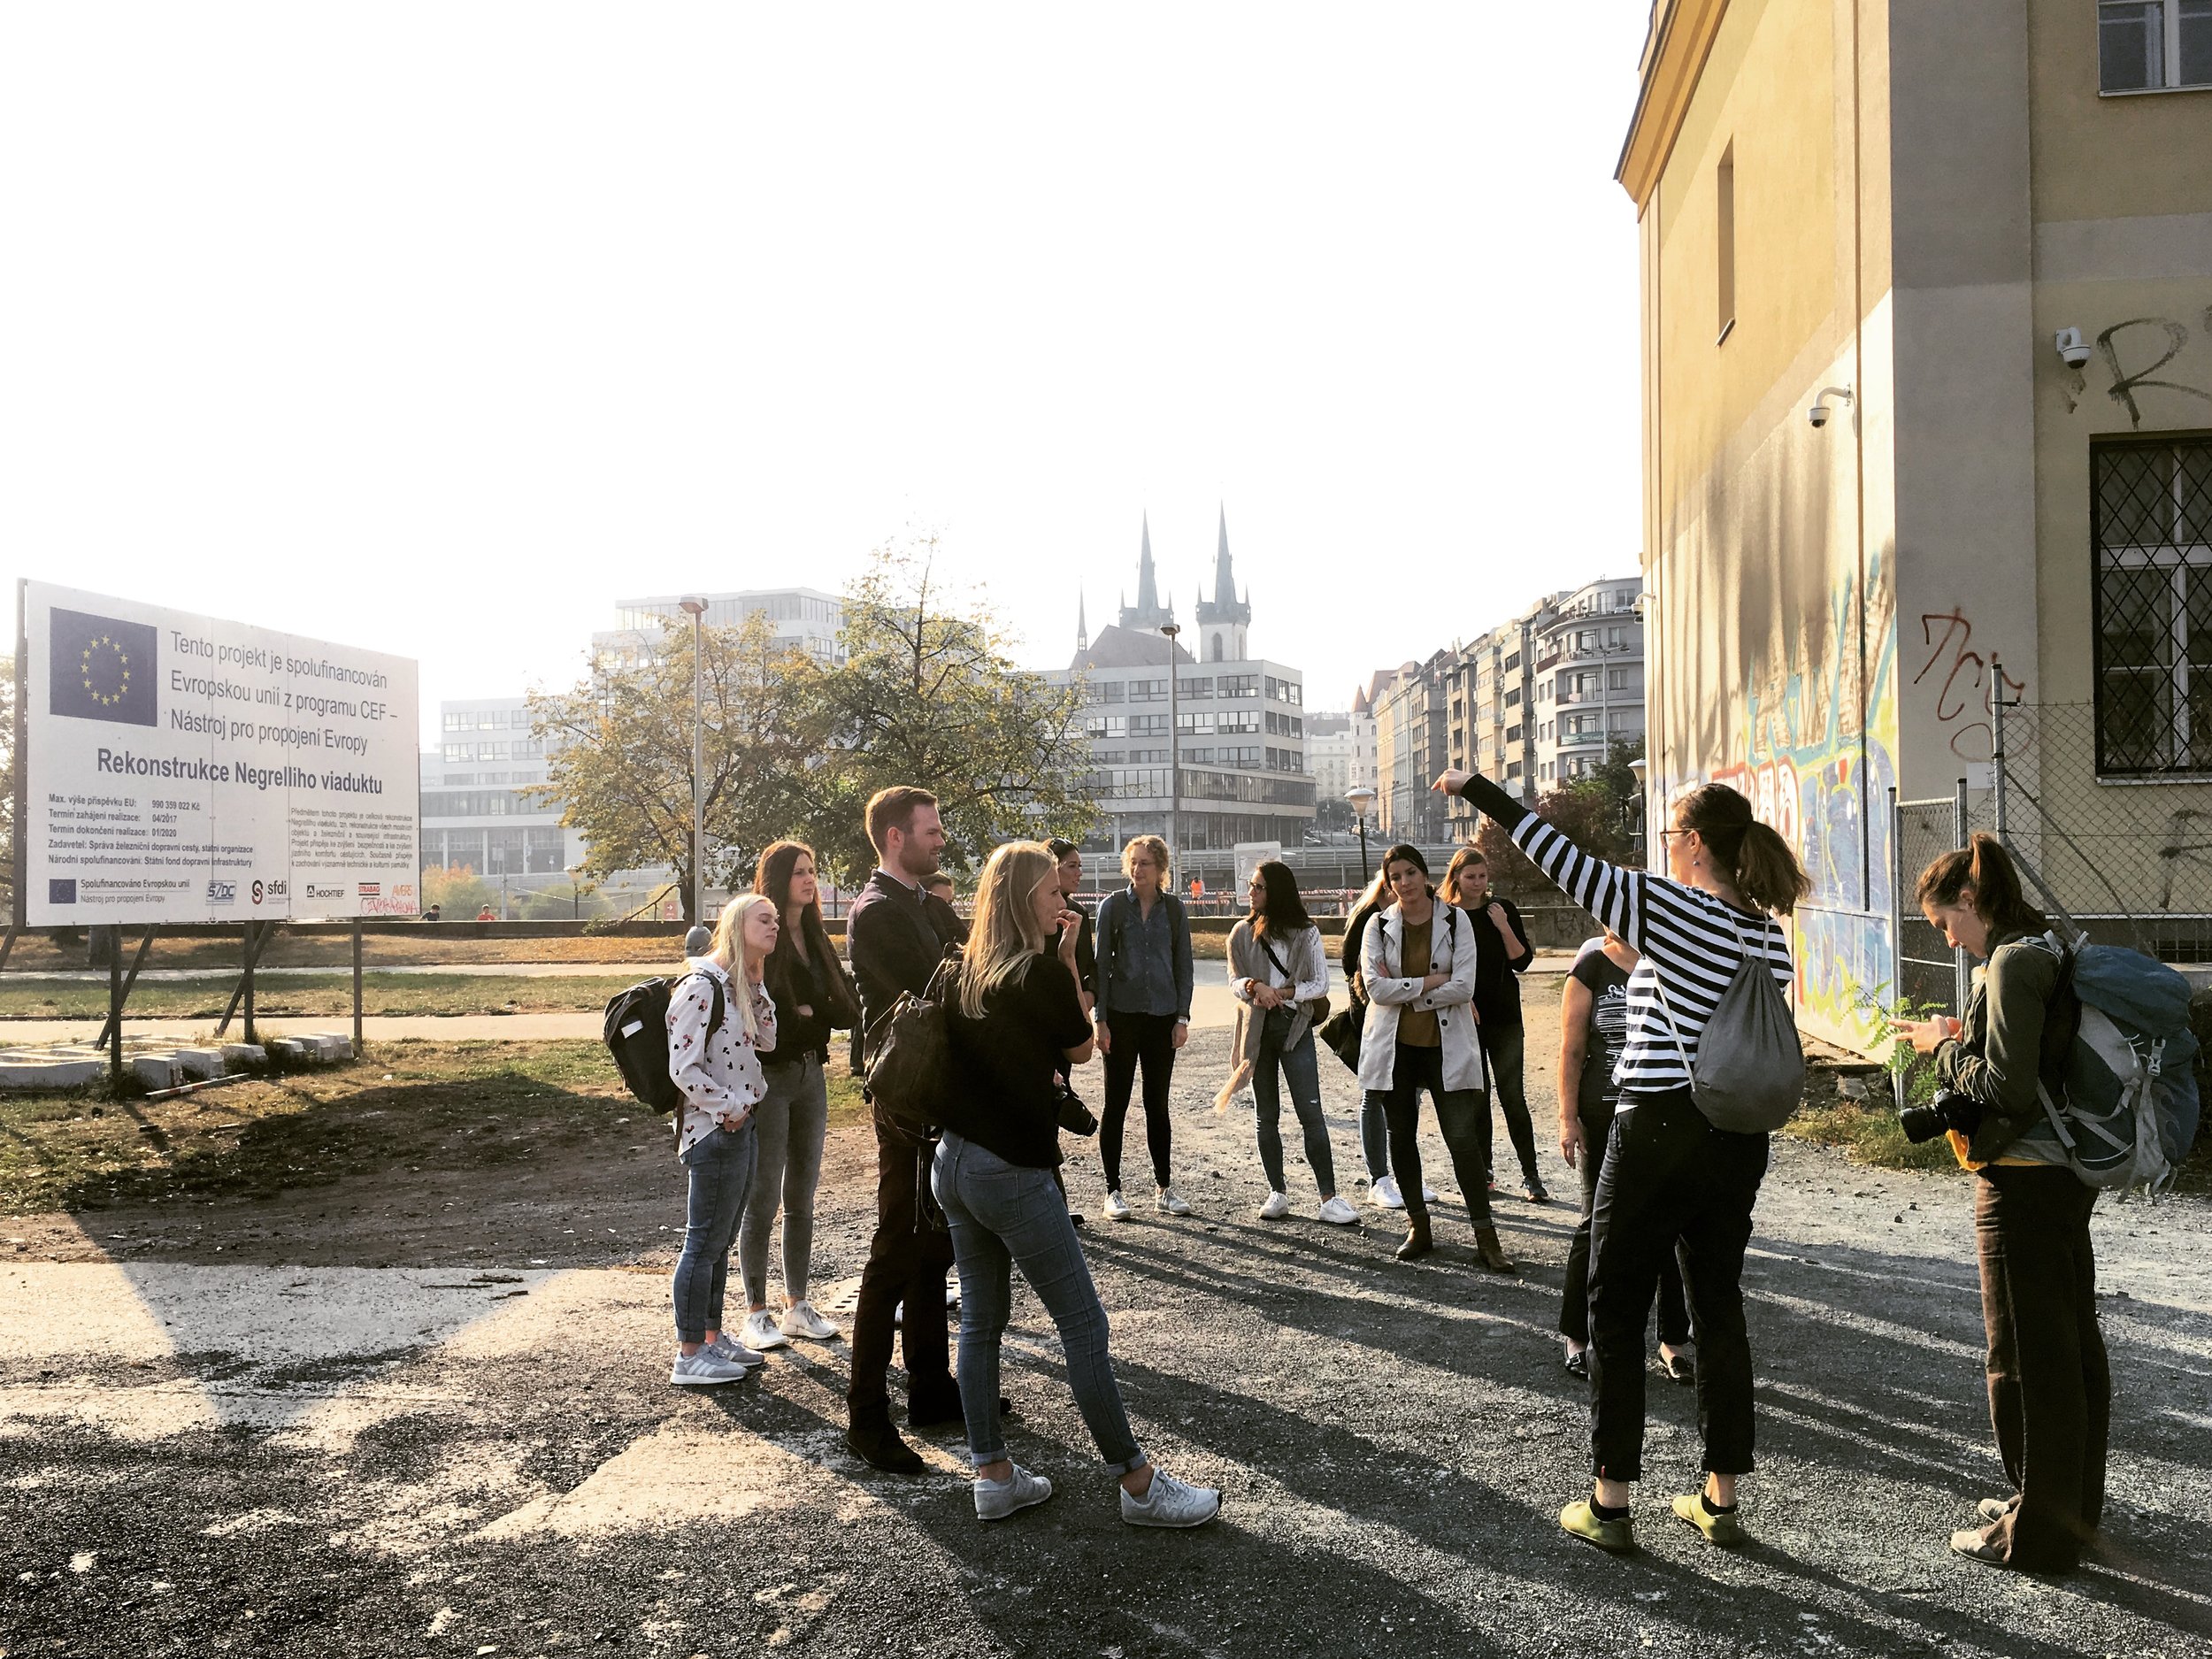  Prof. Wotha and her students analysing Prague 7 Bubny area, guided by architect Karolina Kripnerova  photo (c) Milota Sidorova 